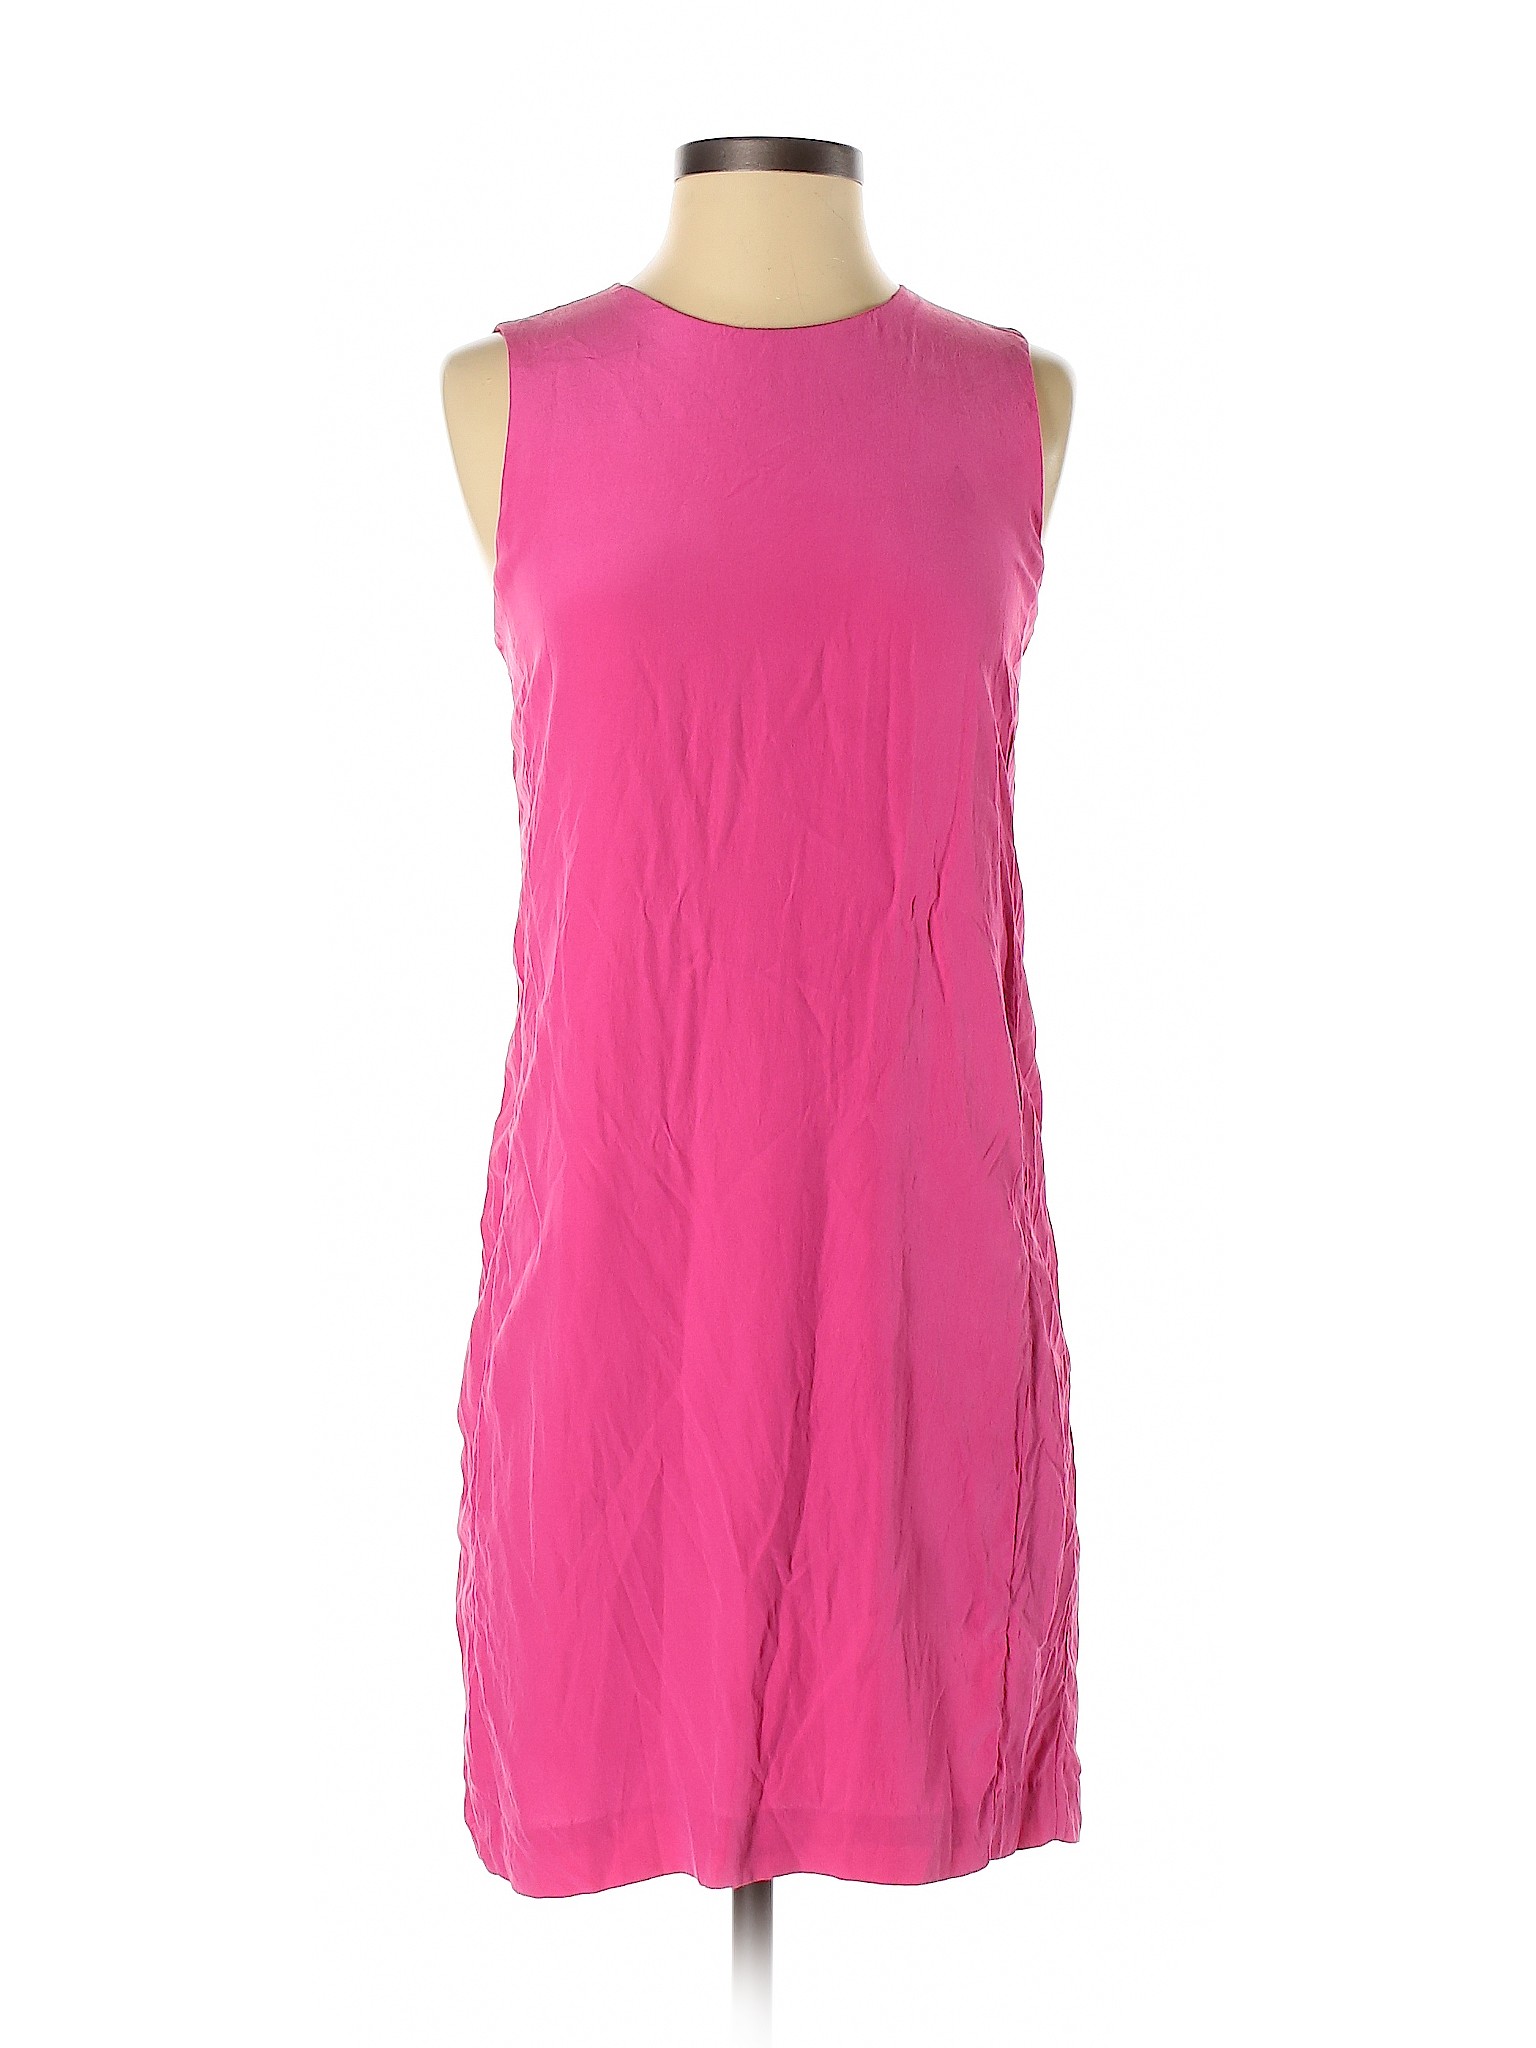 Cynthia Rowley TJX Women Pink Casual Dress 2 | eBay